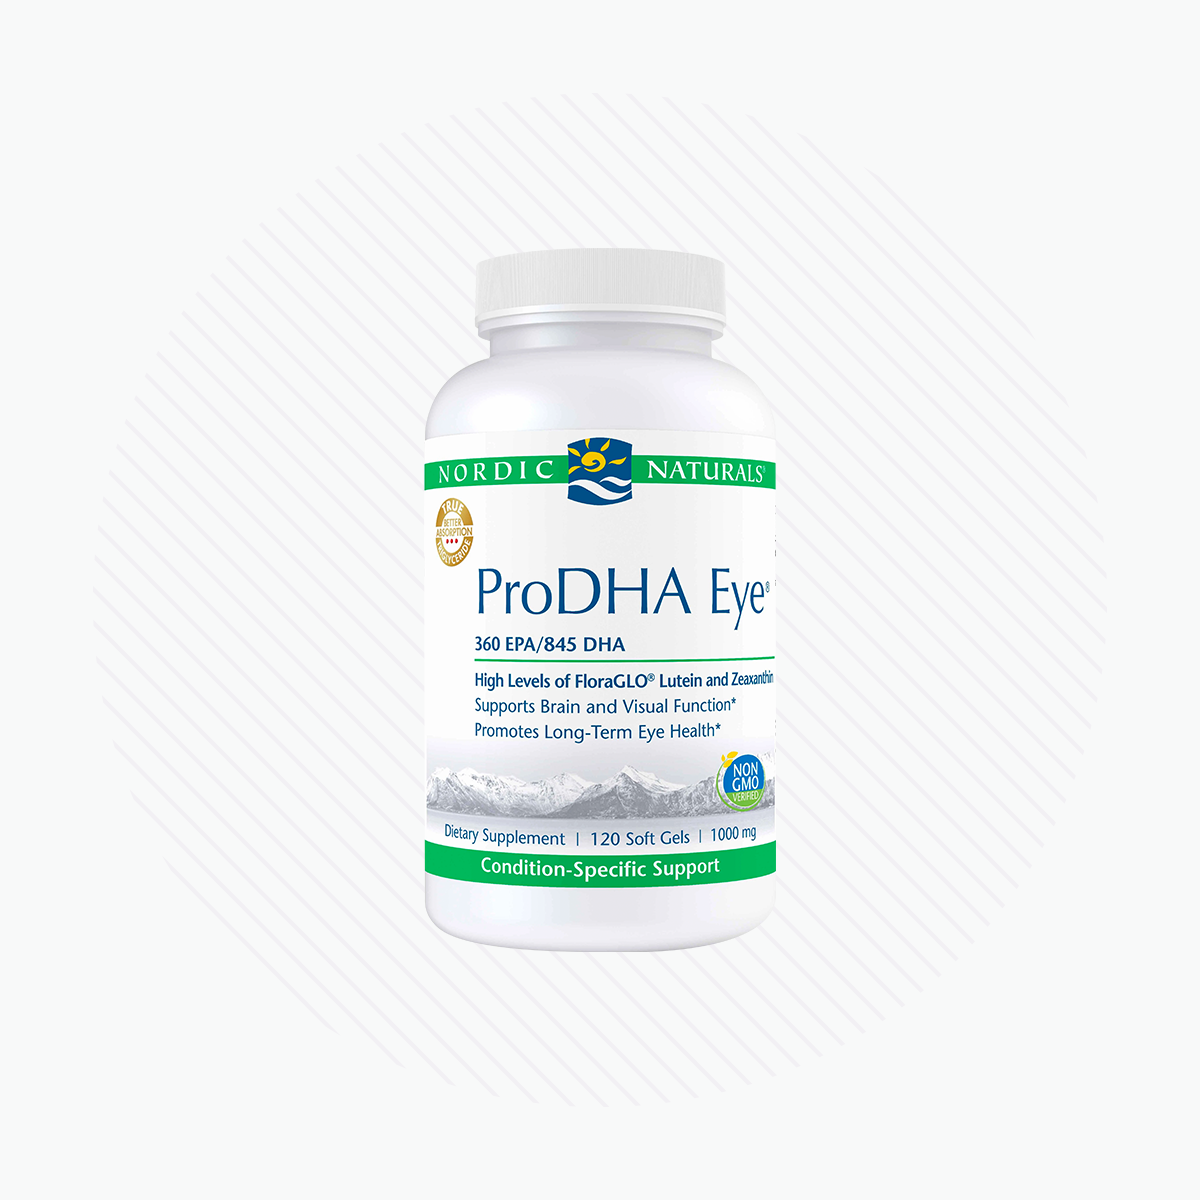 Nordic Naturals ProDHA Eye, Lemon - 60/120 Soft Gels - 1460 mg Omega-3 + FloraGLO Lutein & Zeaxanthin -